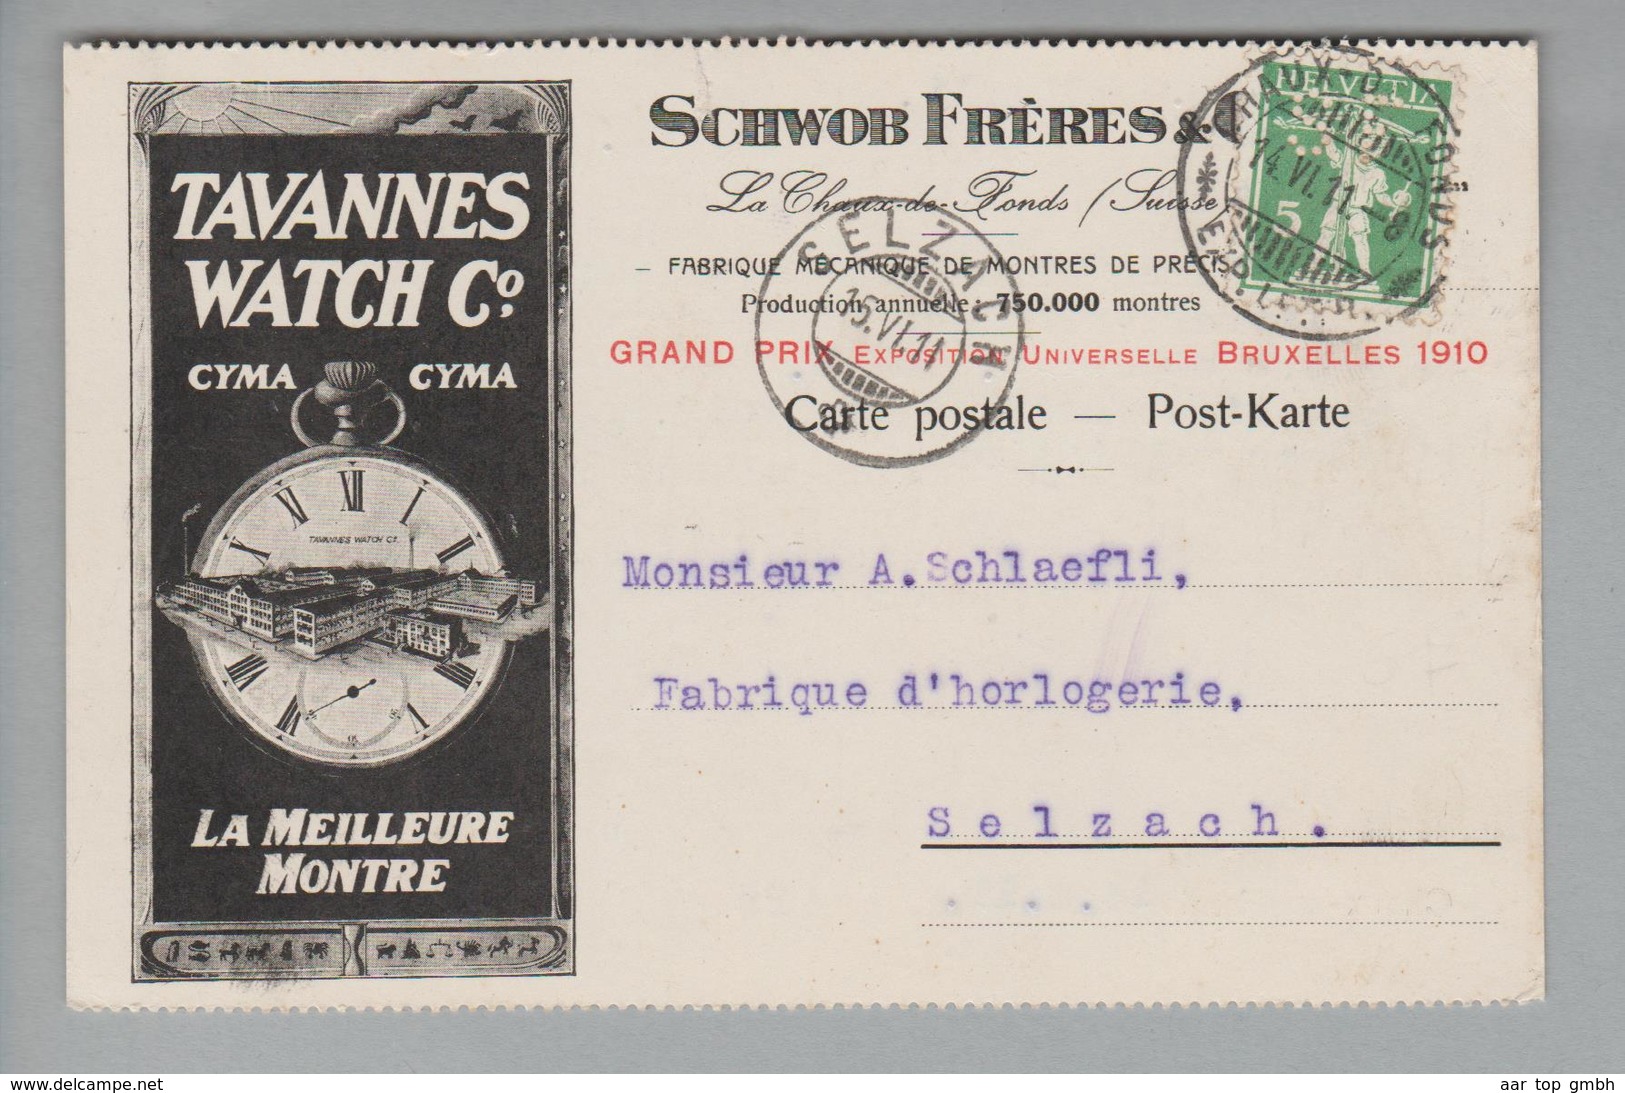 Motiv Uhren 1911-06-14 Chaux-de-Fonds Perfin Auf Illustr. Postkarte #S035 "SF" Nach Selzach - Horlogerie